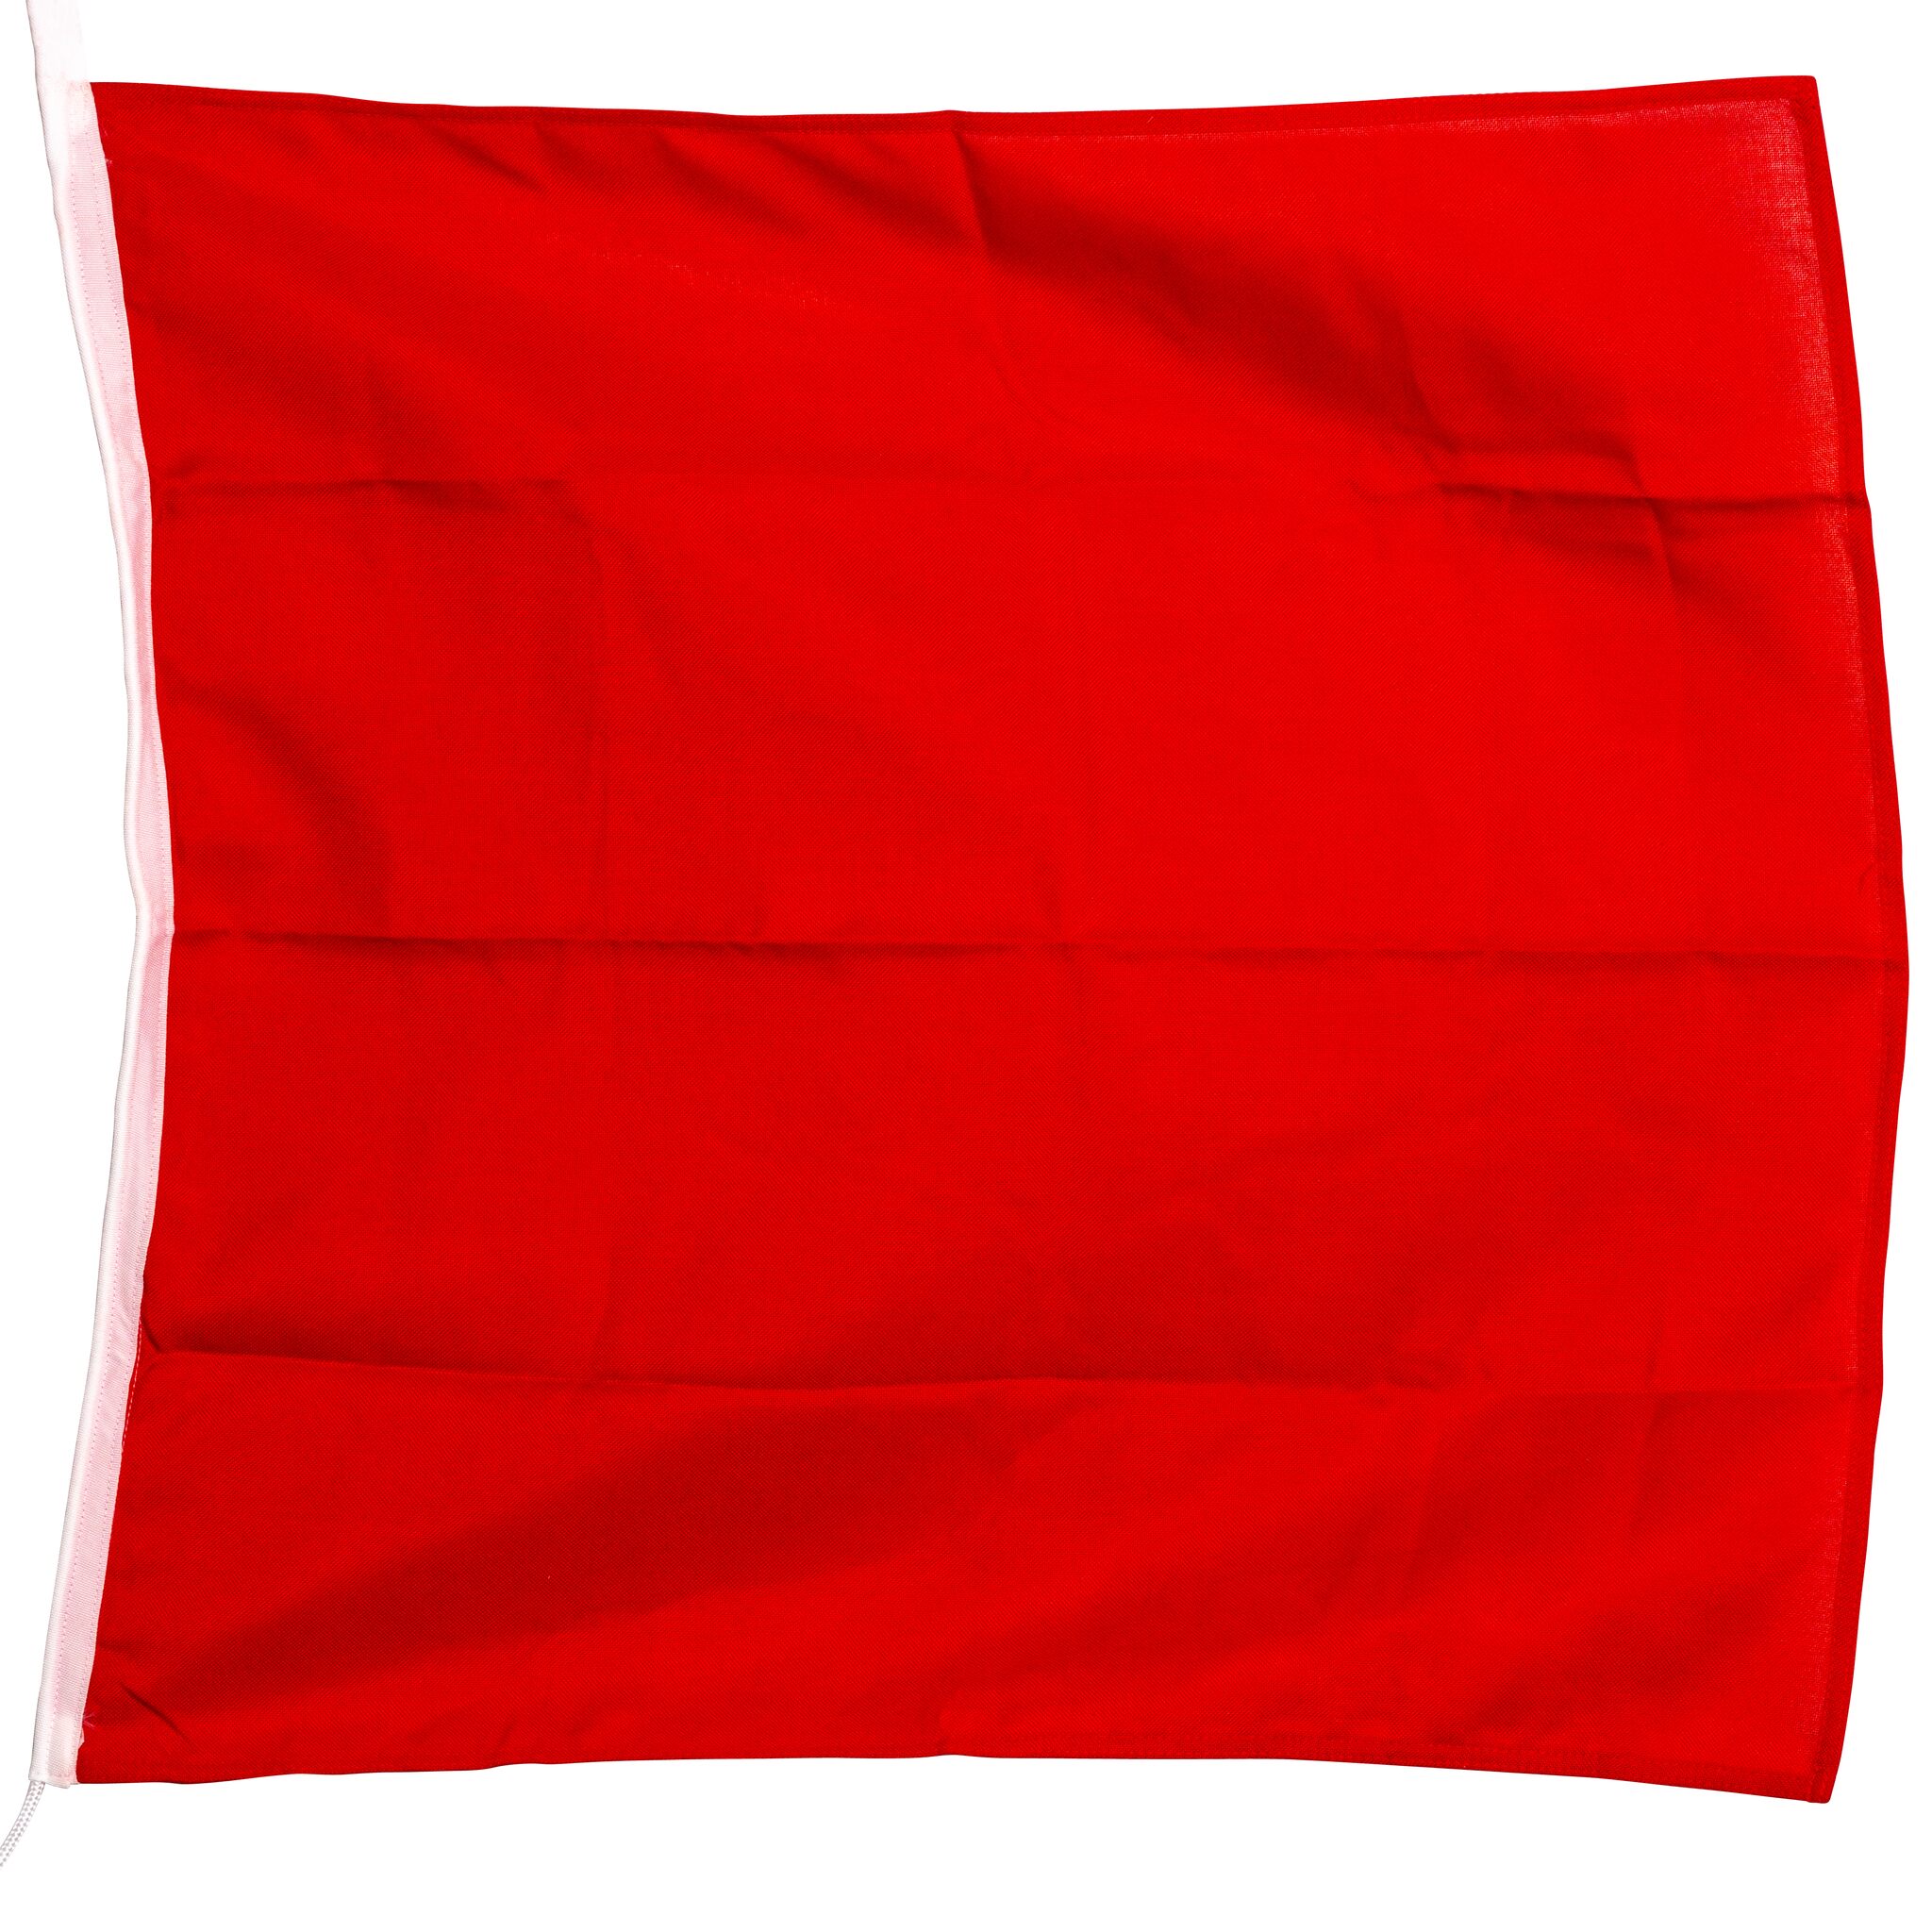 awn distress flag (60 x 60 cm)